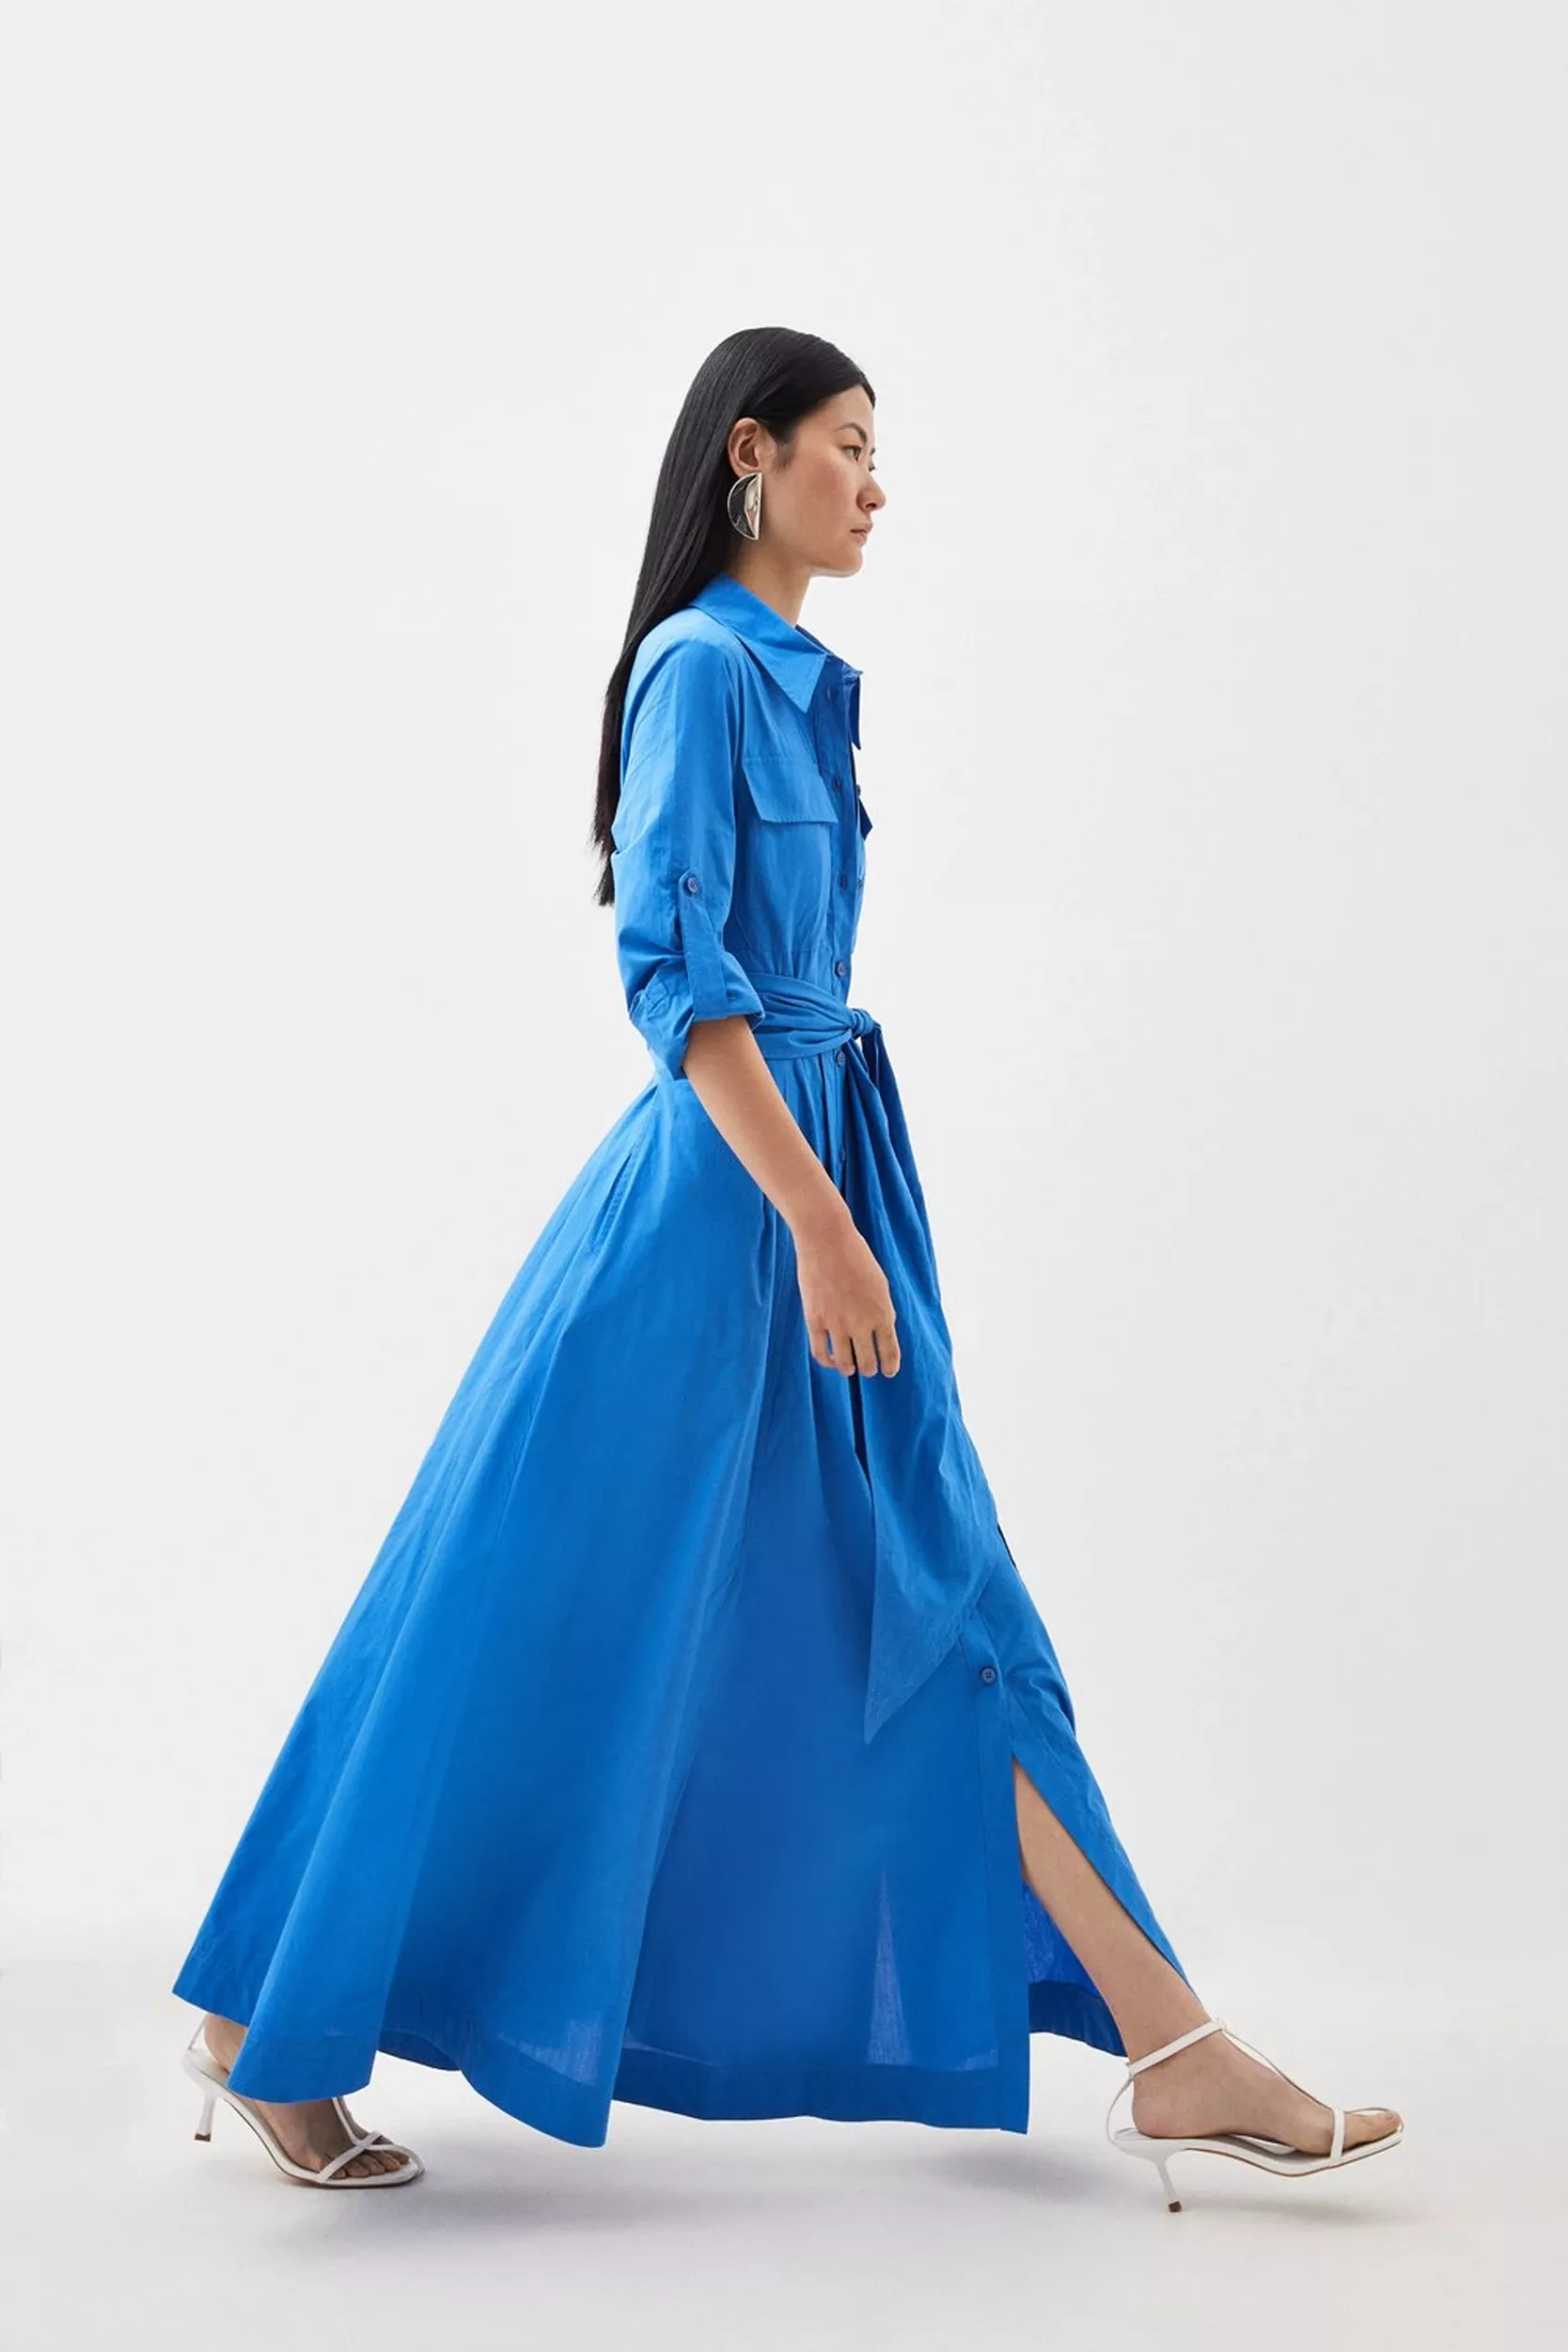 Tailored Denim Belted Midi Shirt Dress | Karen Millen